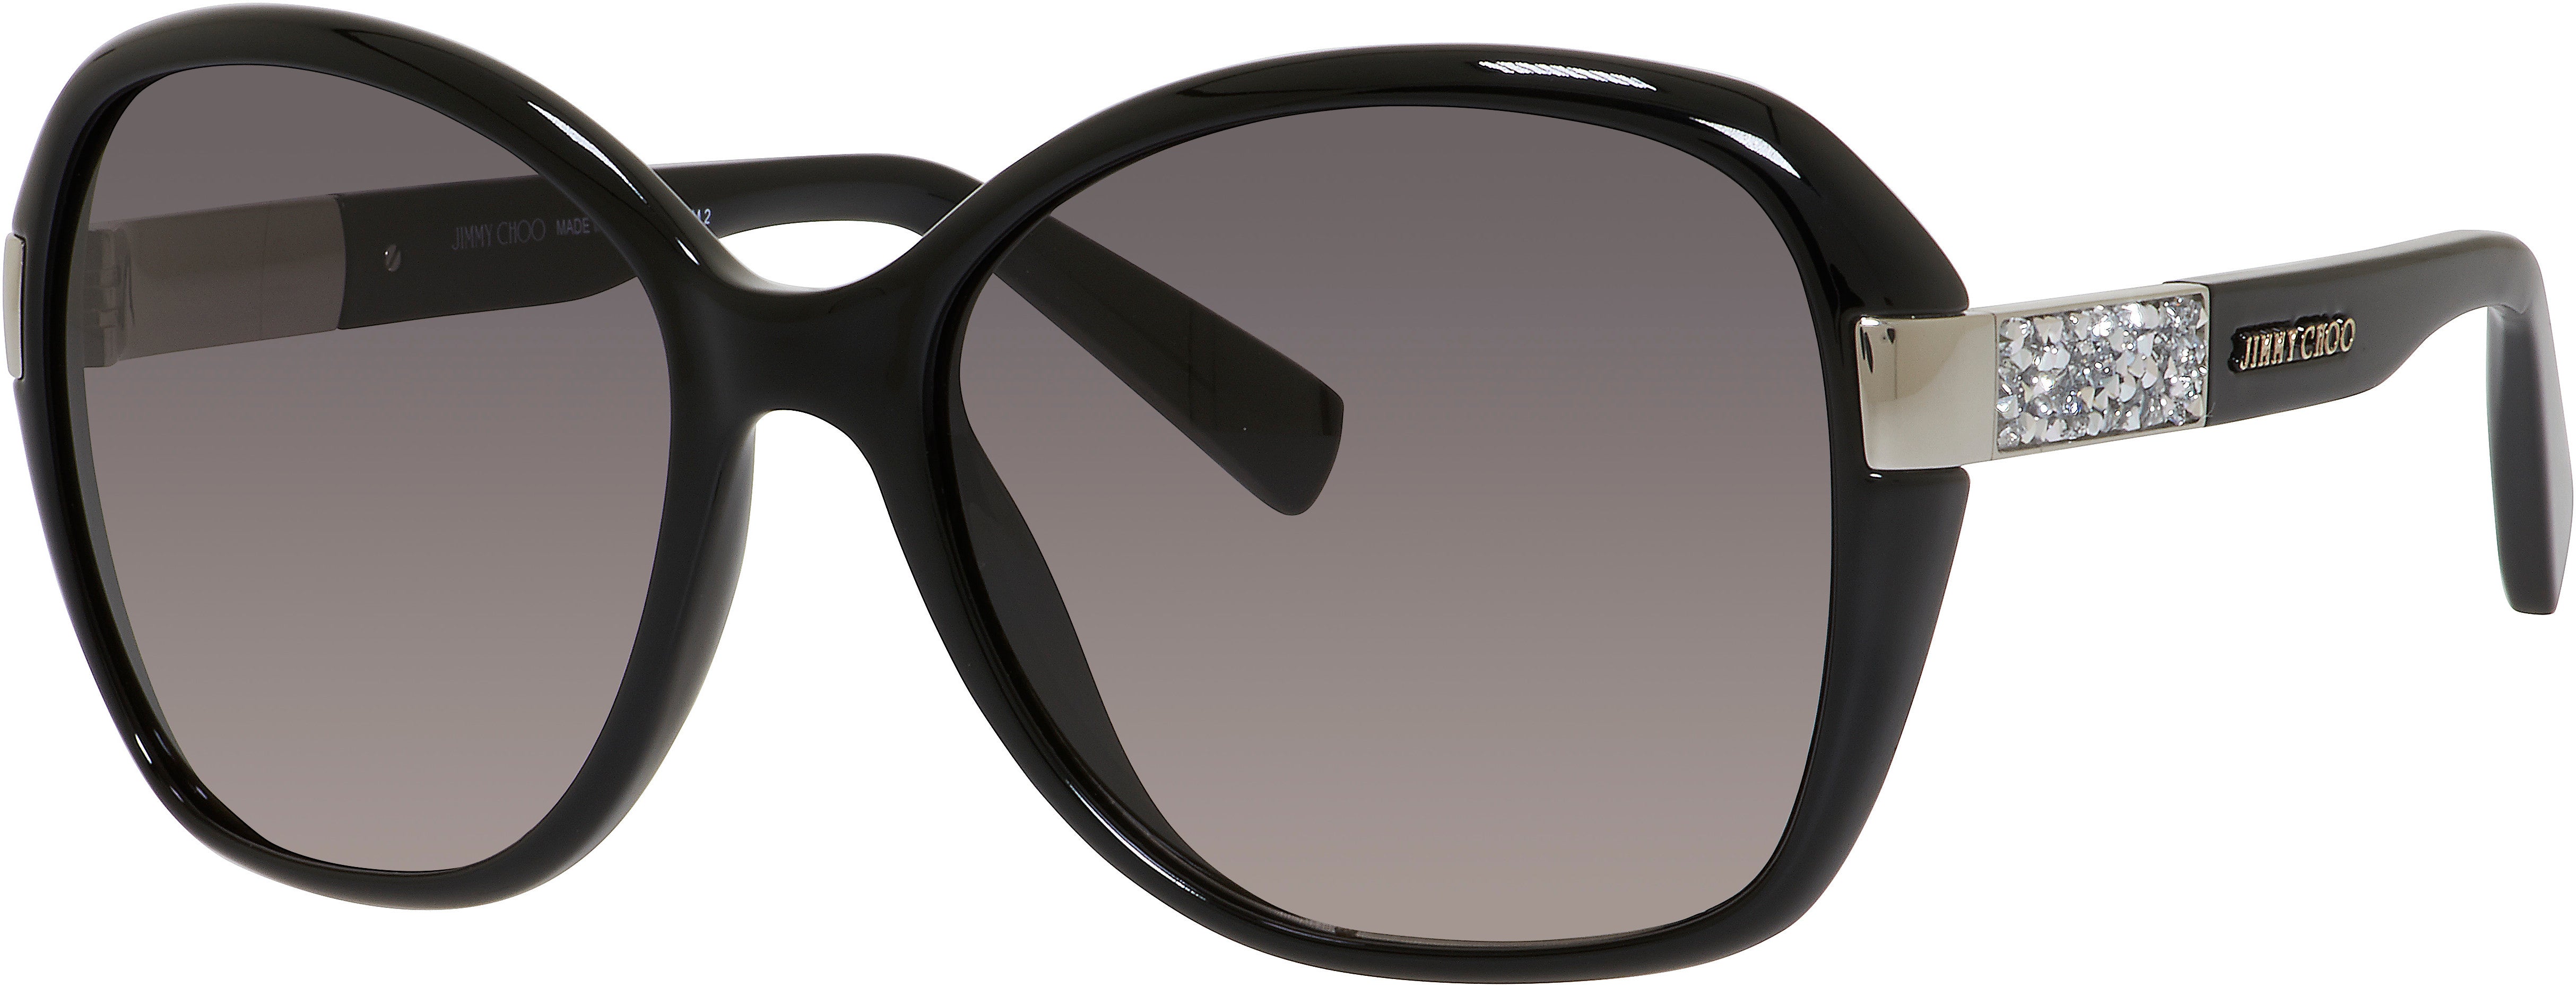 Jimmy Choo Alana/S Rectangular Sunglasses 0D28-0D28  Shiny Black (EU Gray Gradient)